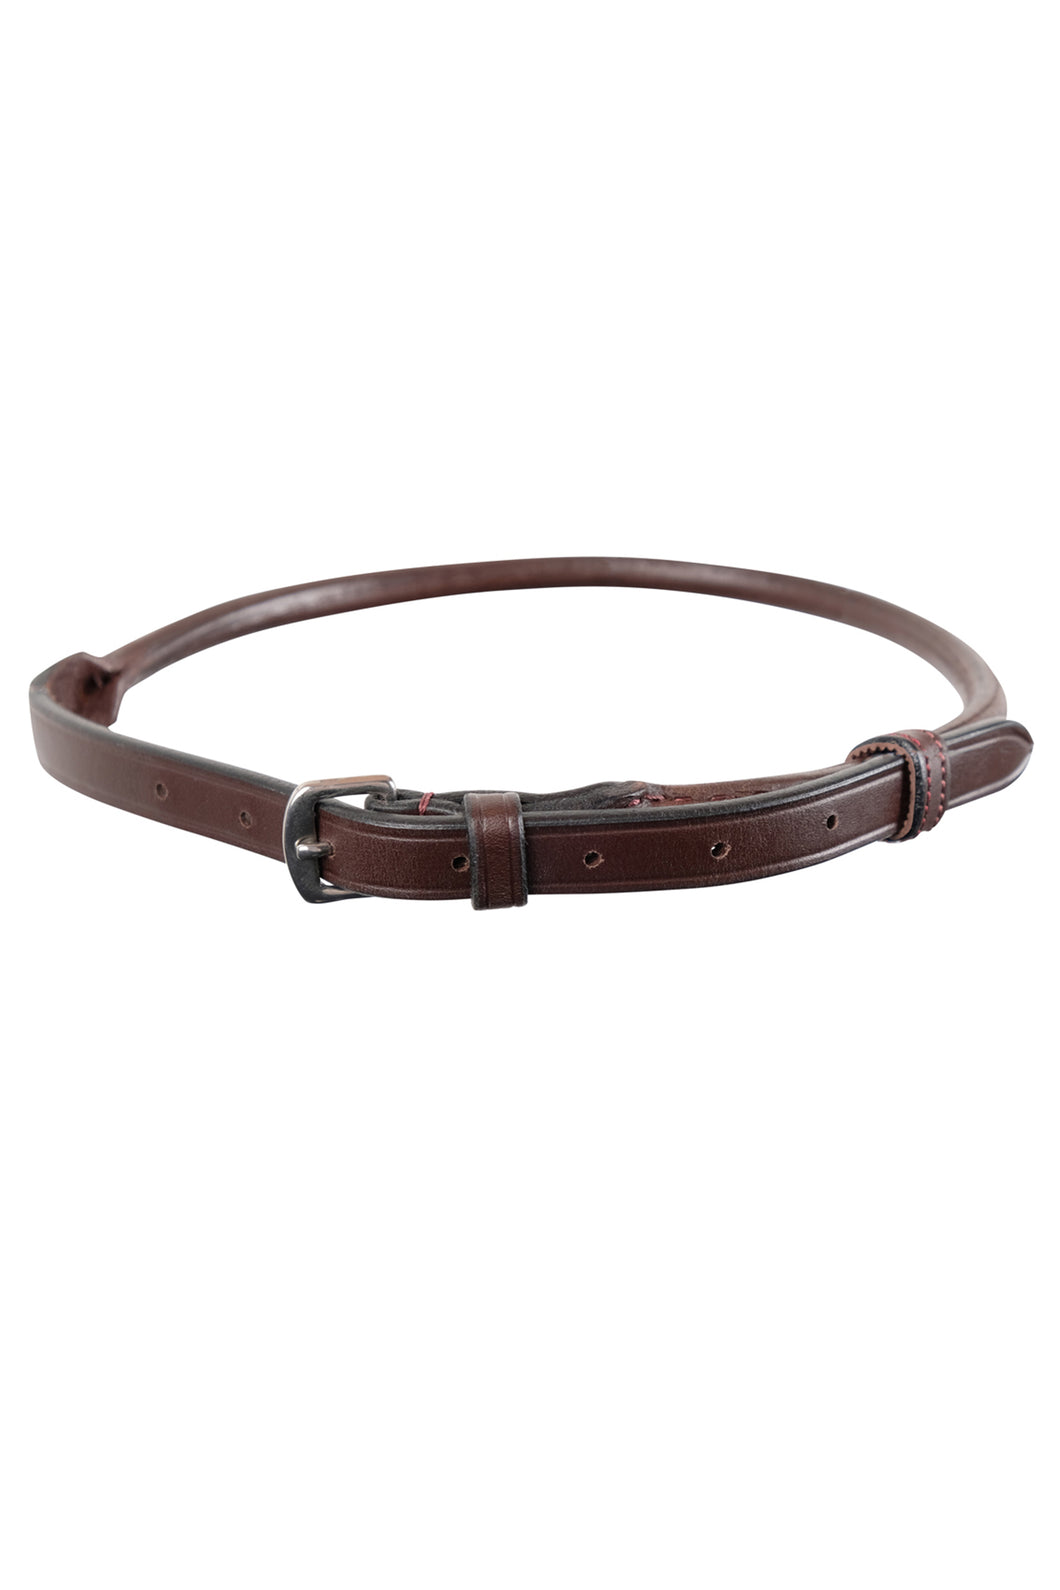 Round Flash Strap - Brown Leather